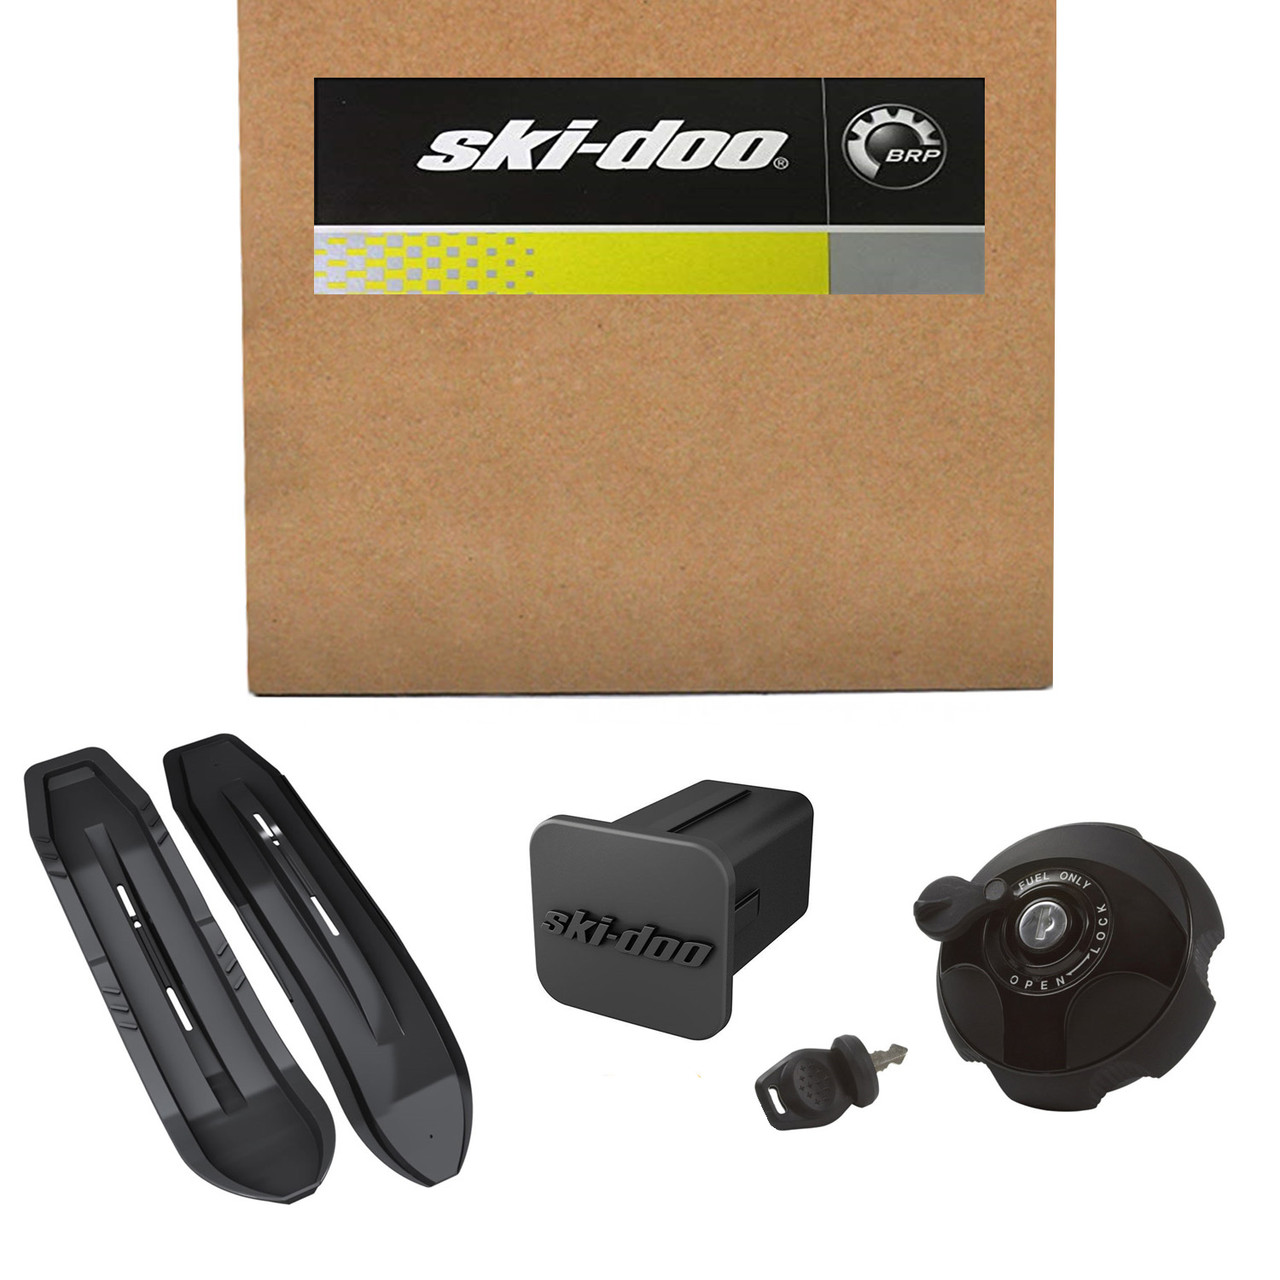 Ski-Doo New OEM Electronic Box, 420666920